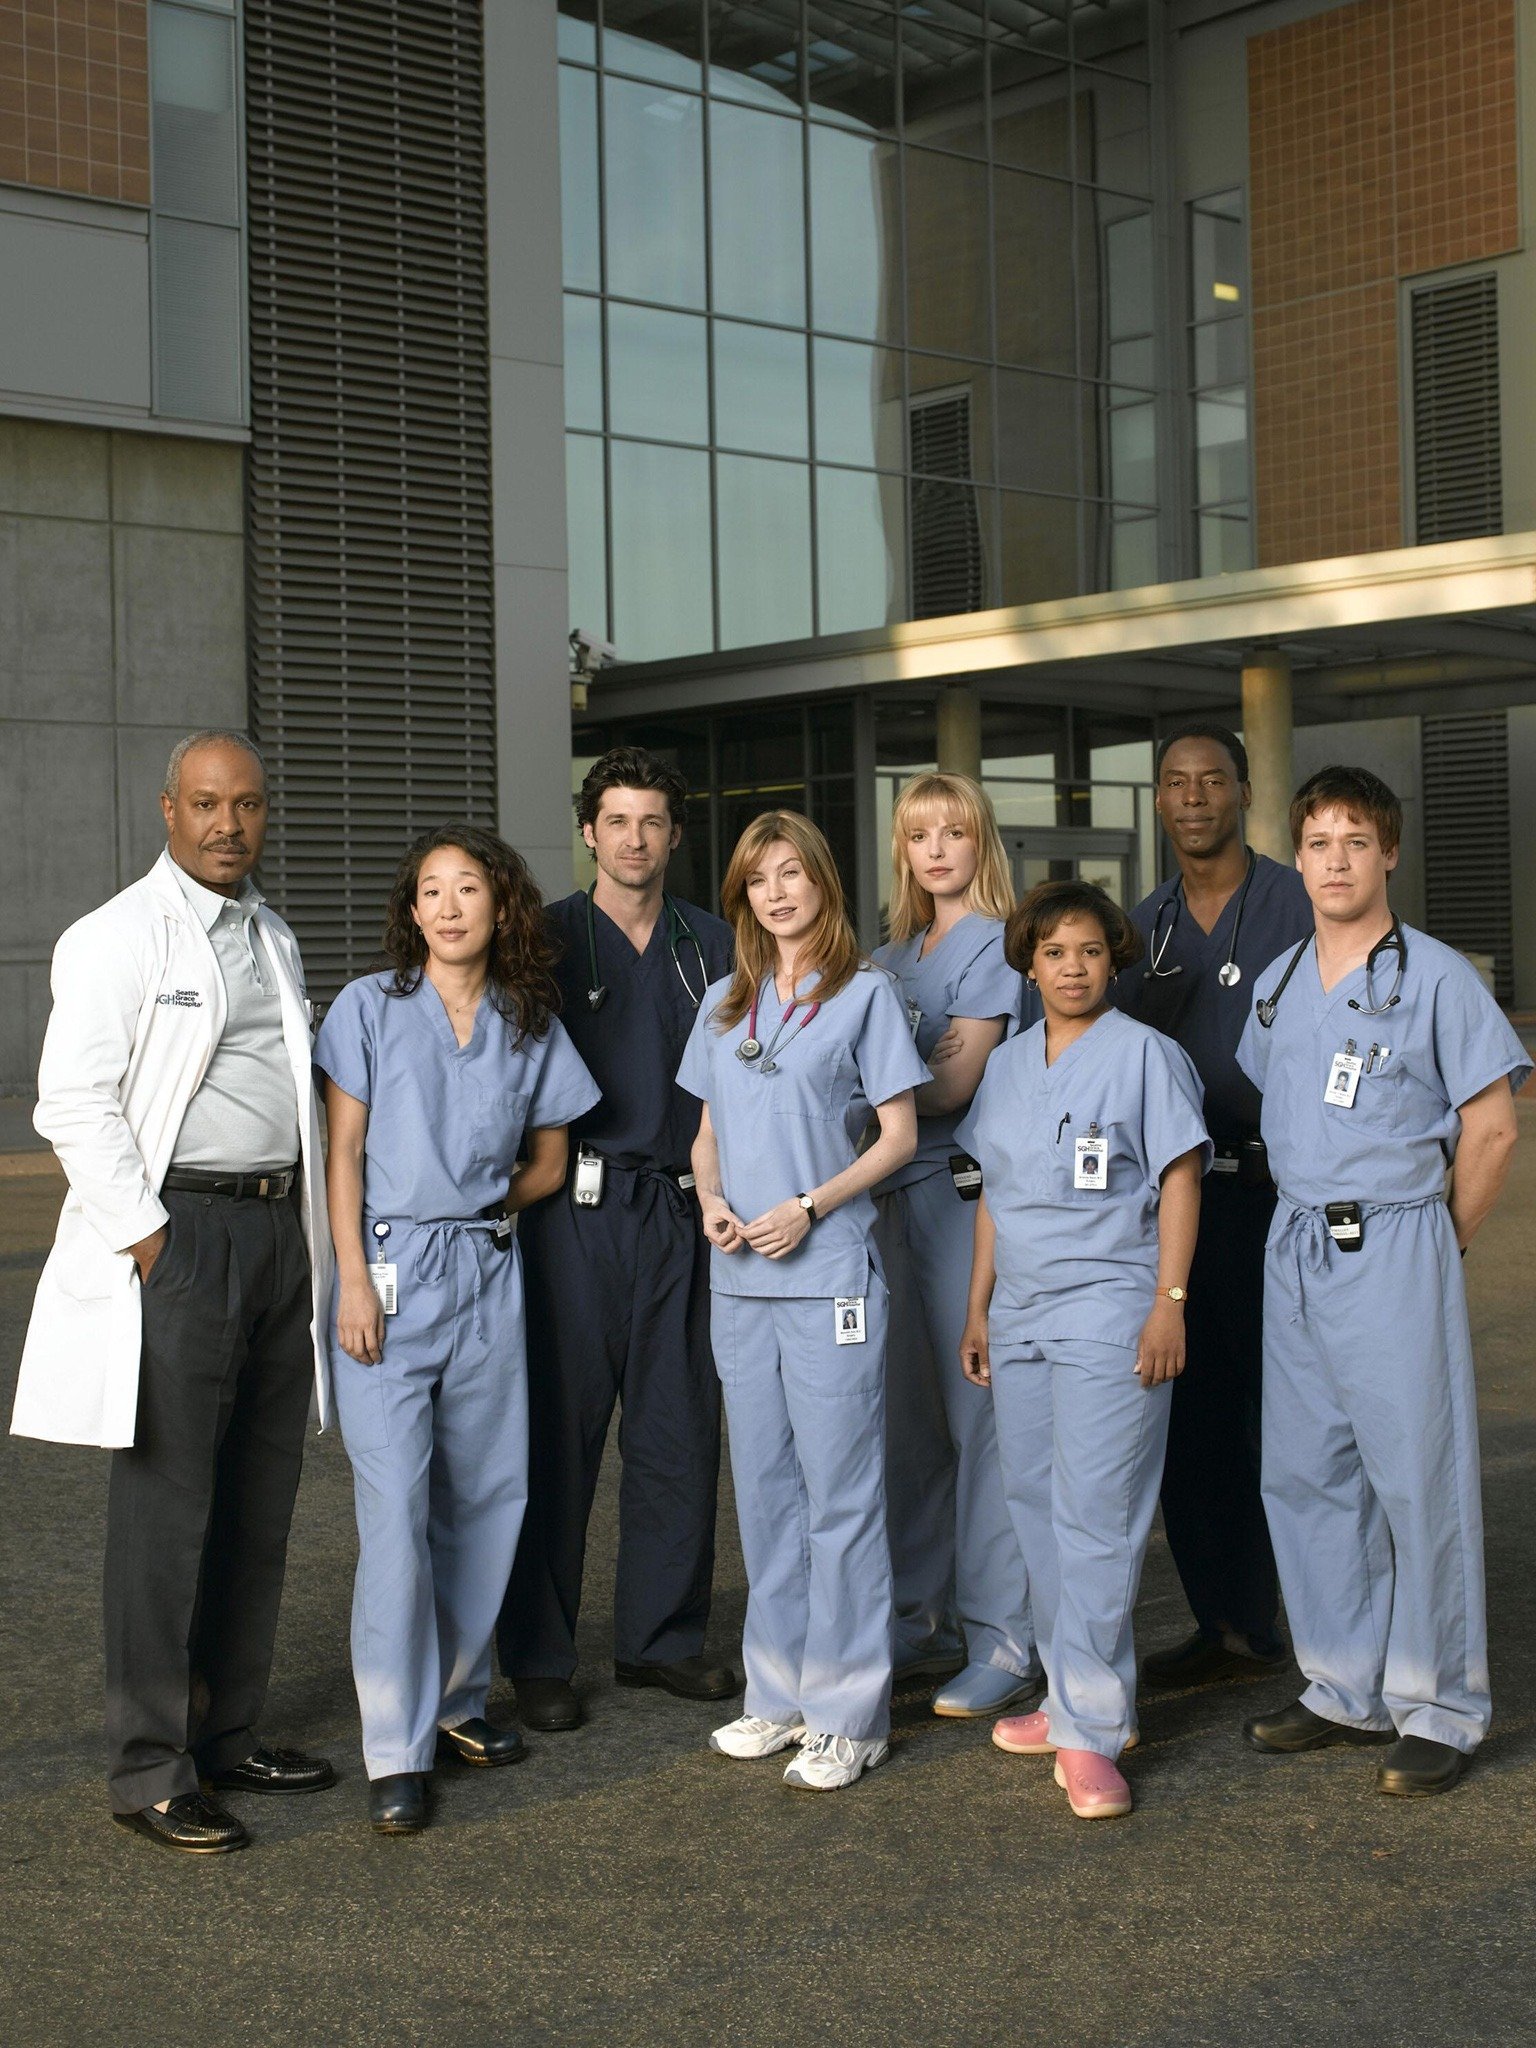 Greys Anatomy (2005) Cast and Crew